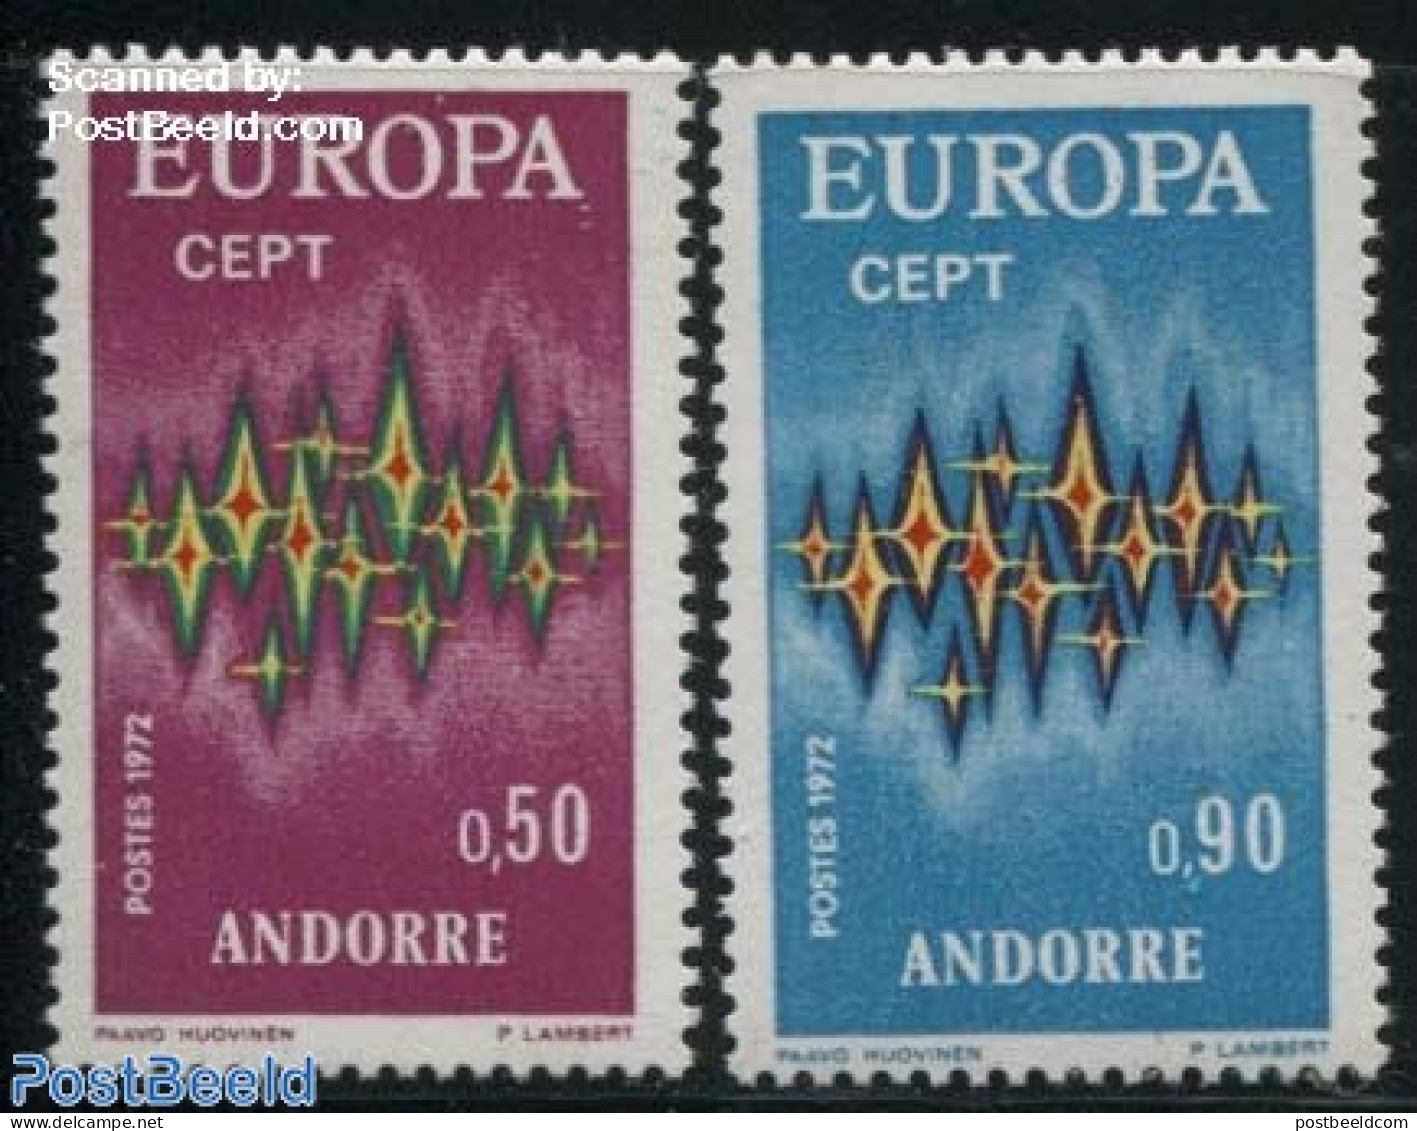 Andorra, French Post 1972 Europa CEPT 2v, Mint NH, History - Europa (cept) - Ongebruikt